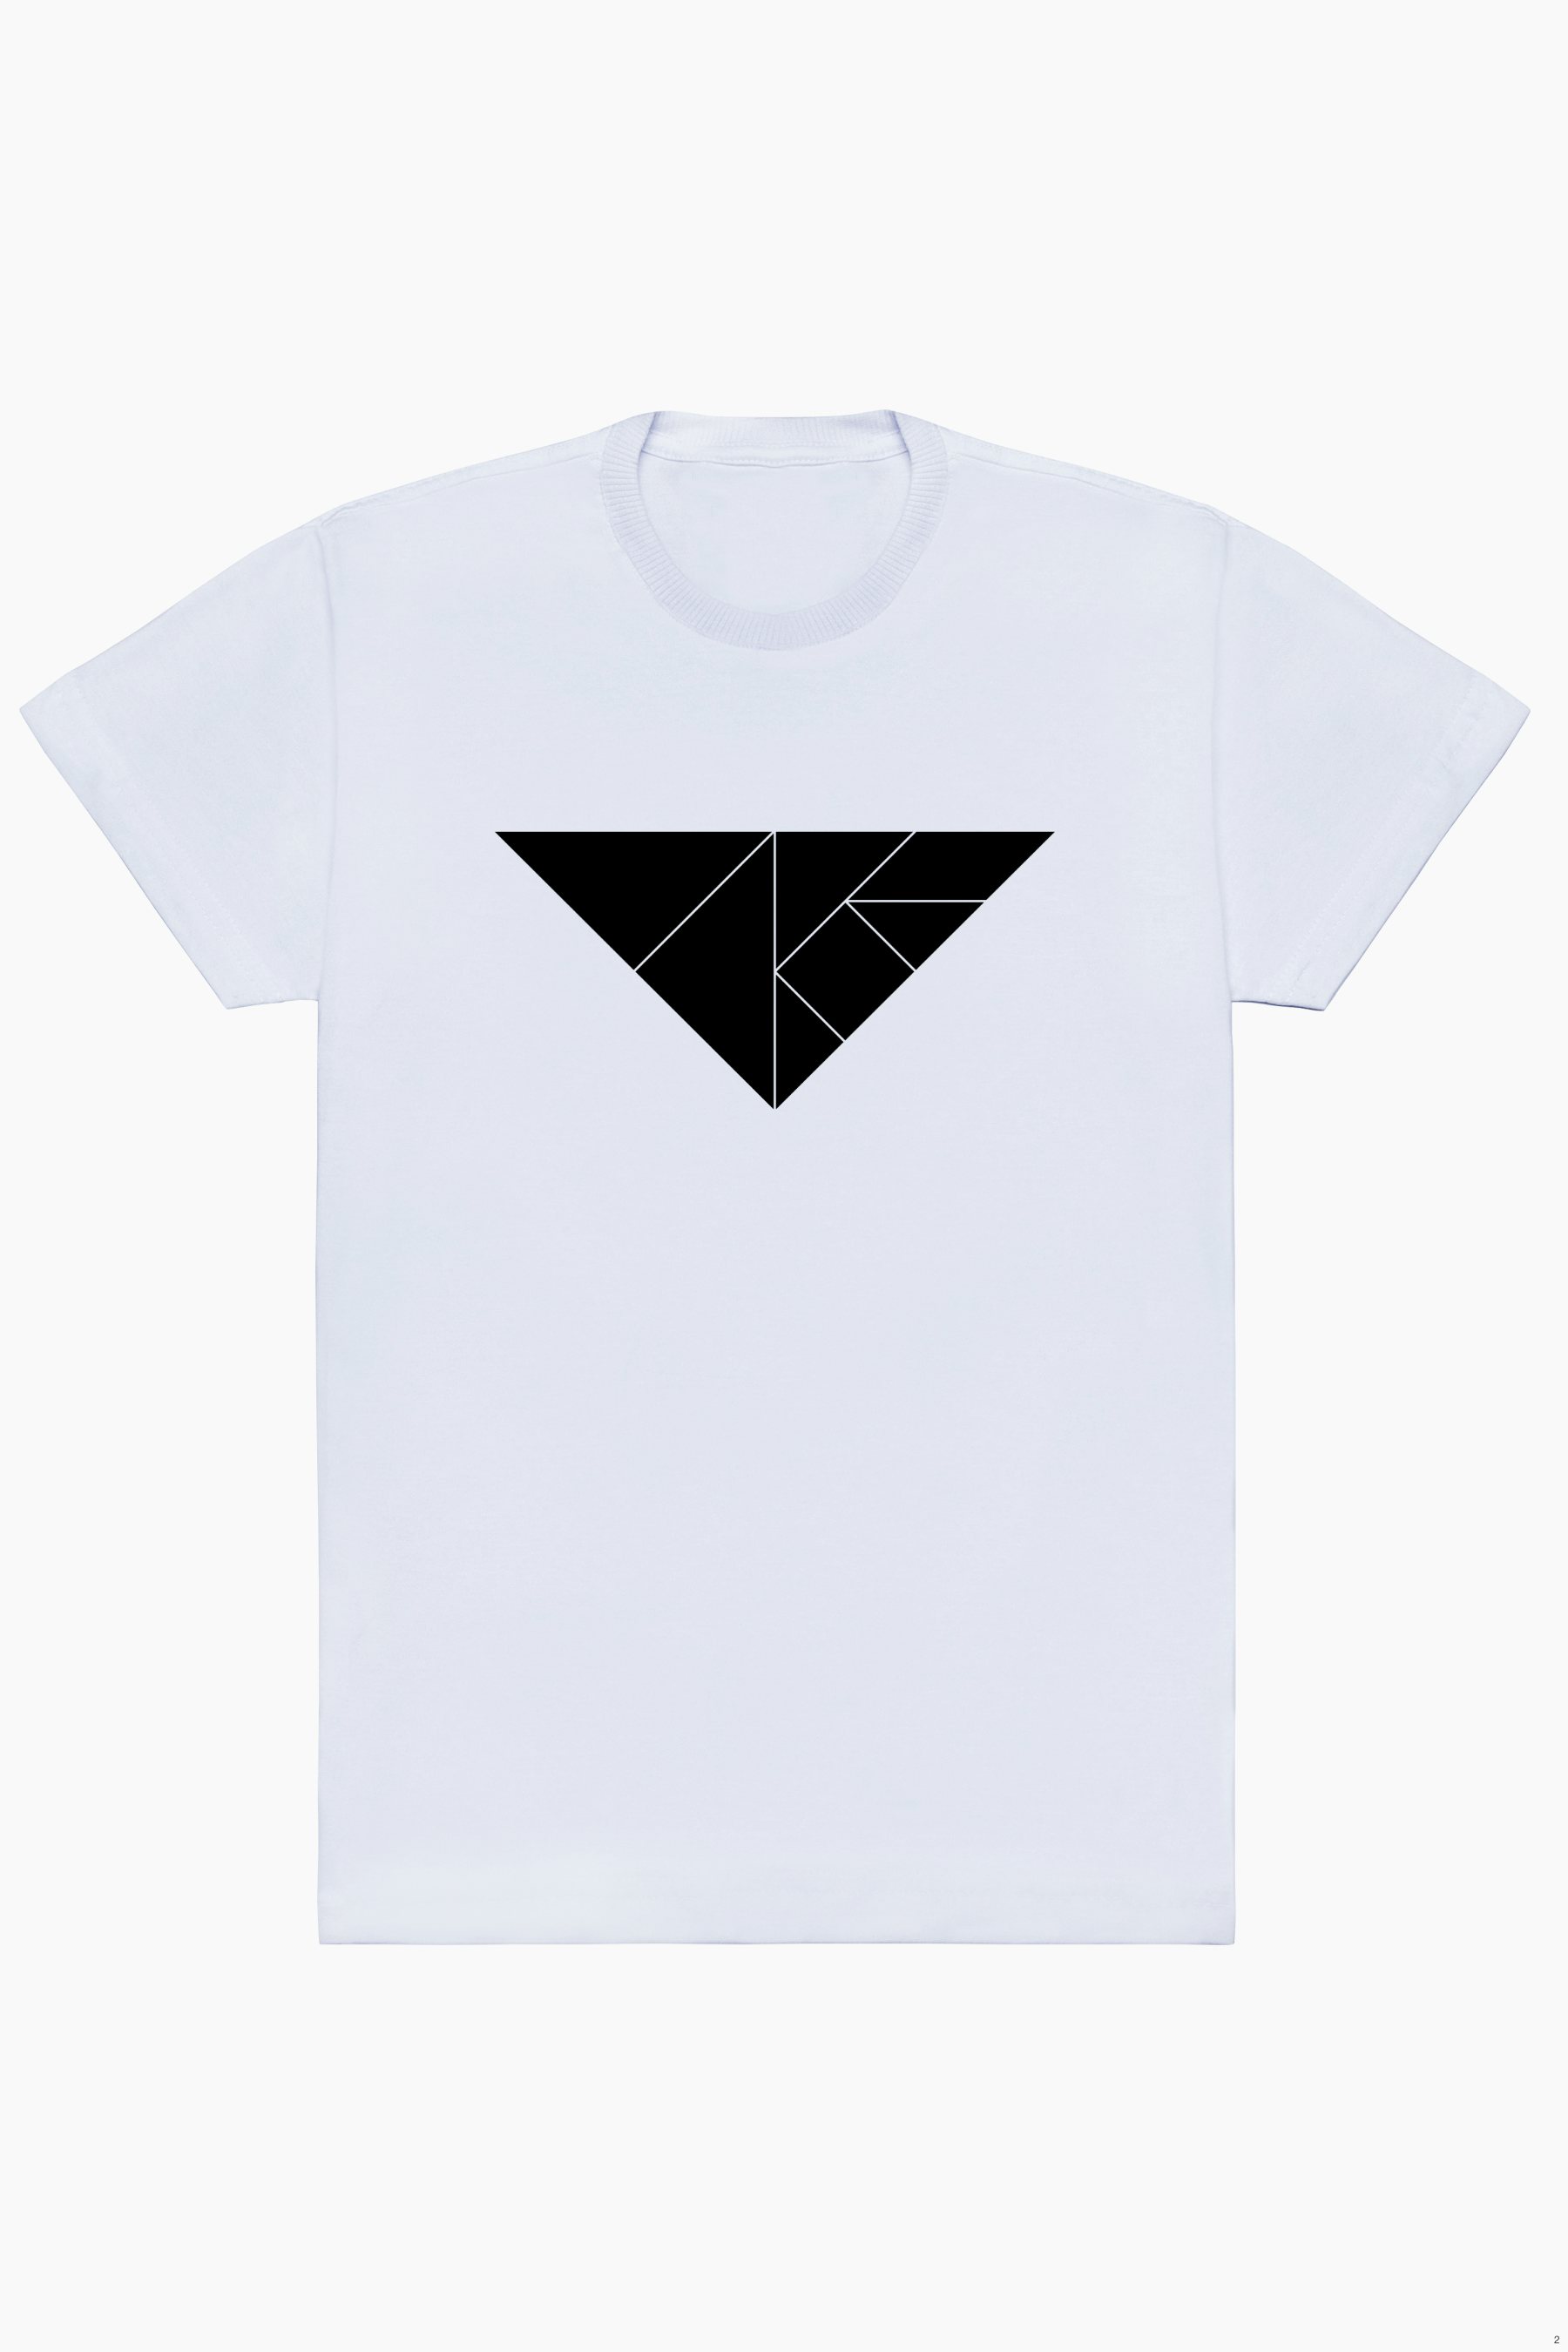 Camiseta Forma Geométrica Triângulo Invertido - Ideograma